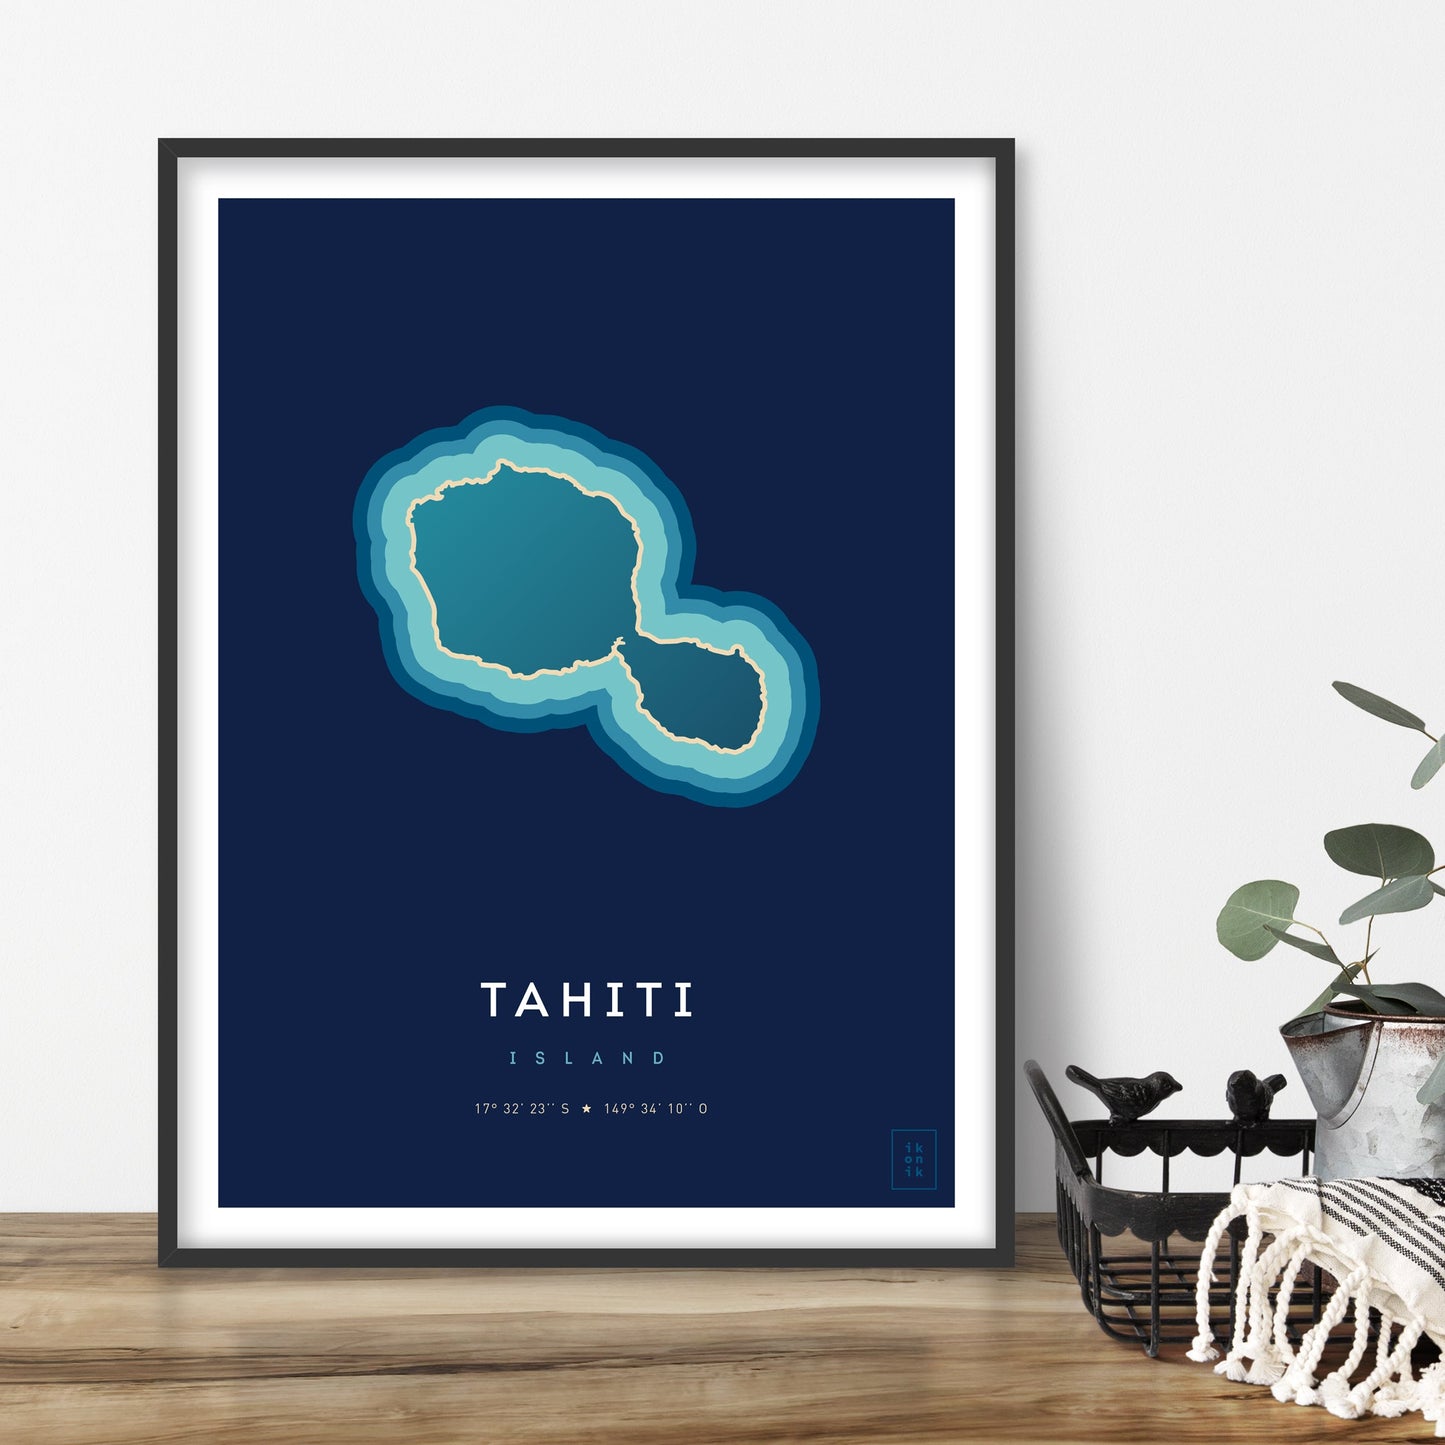 Tahiti island poster